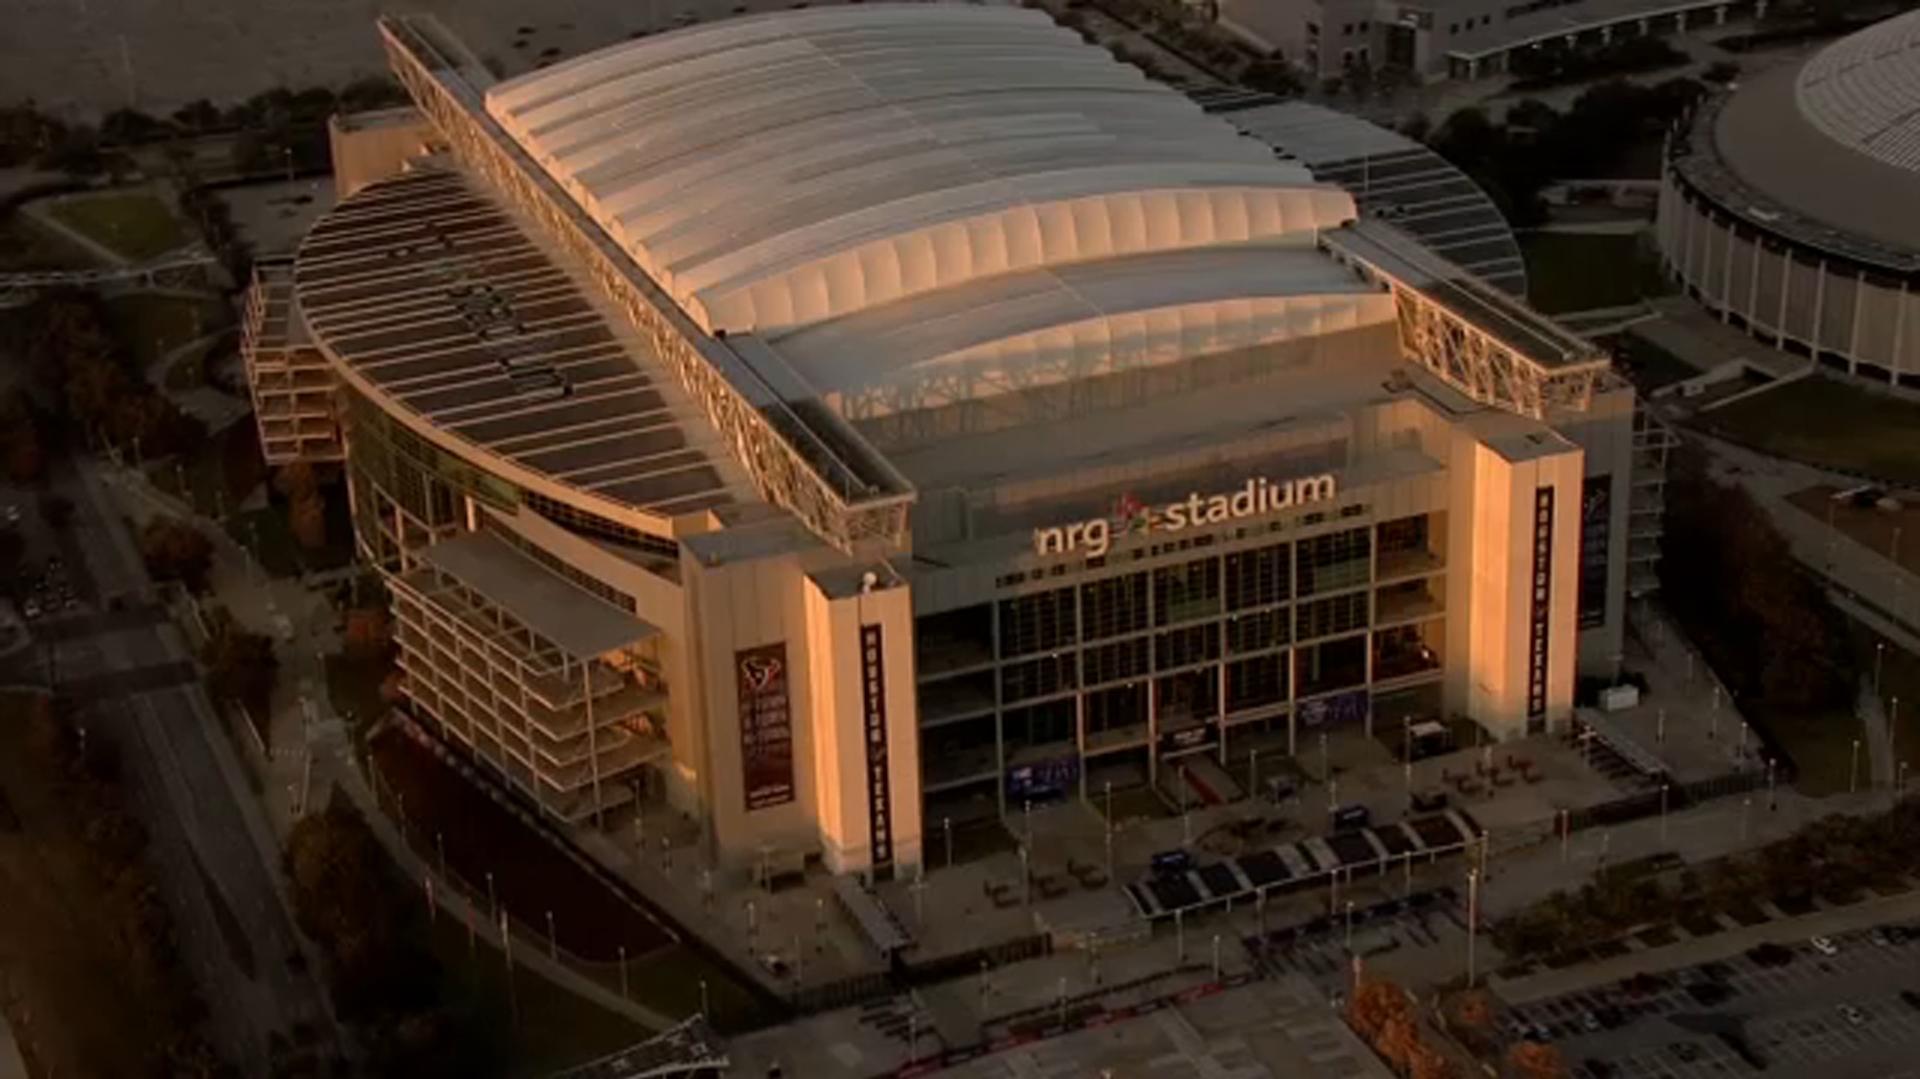 🔥 Free download Copa America Houstons NRG Stadium considering next